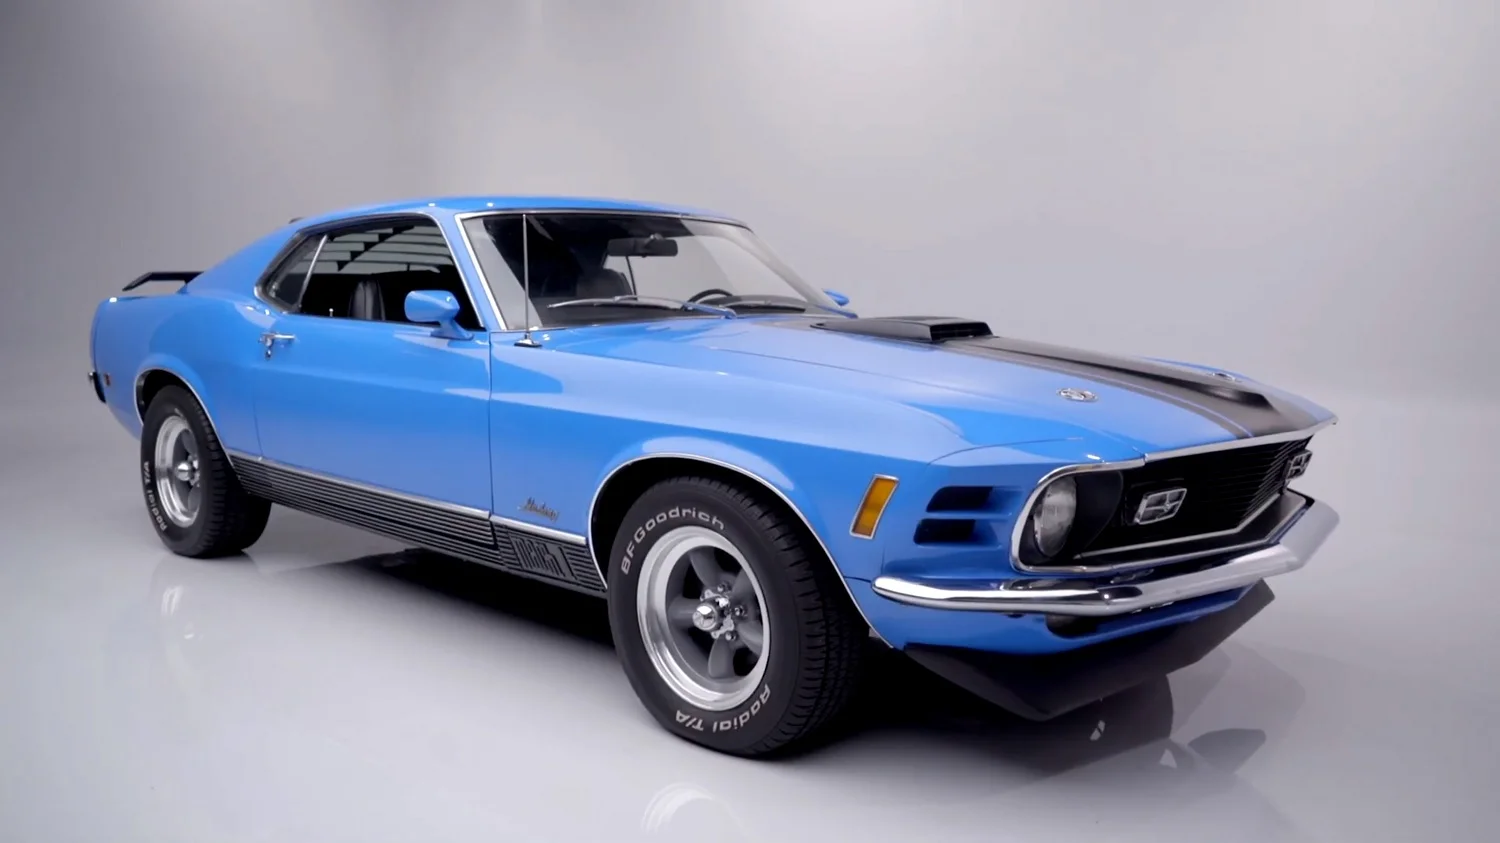 1970 Mustang Blue